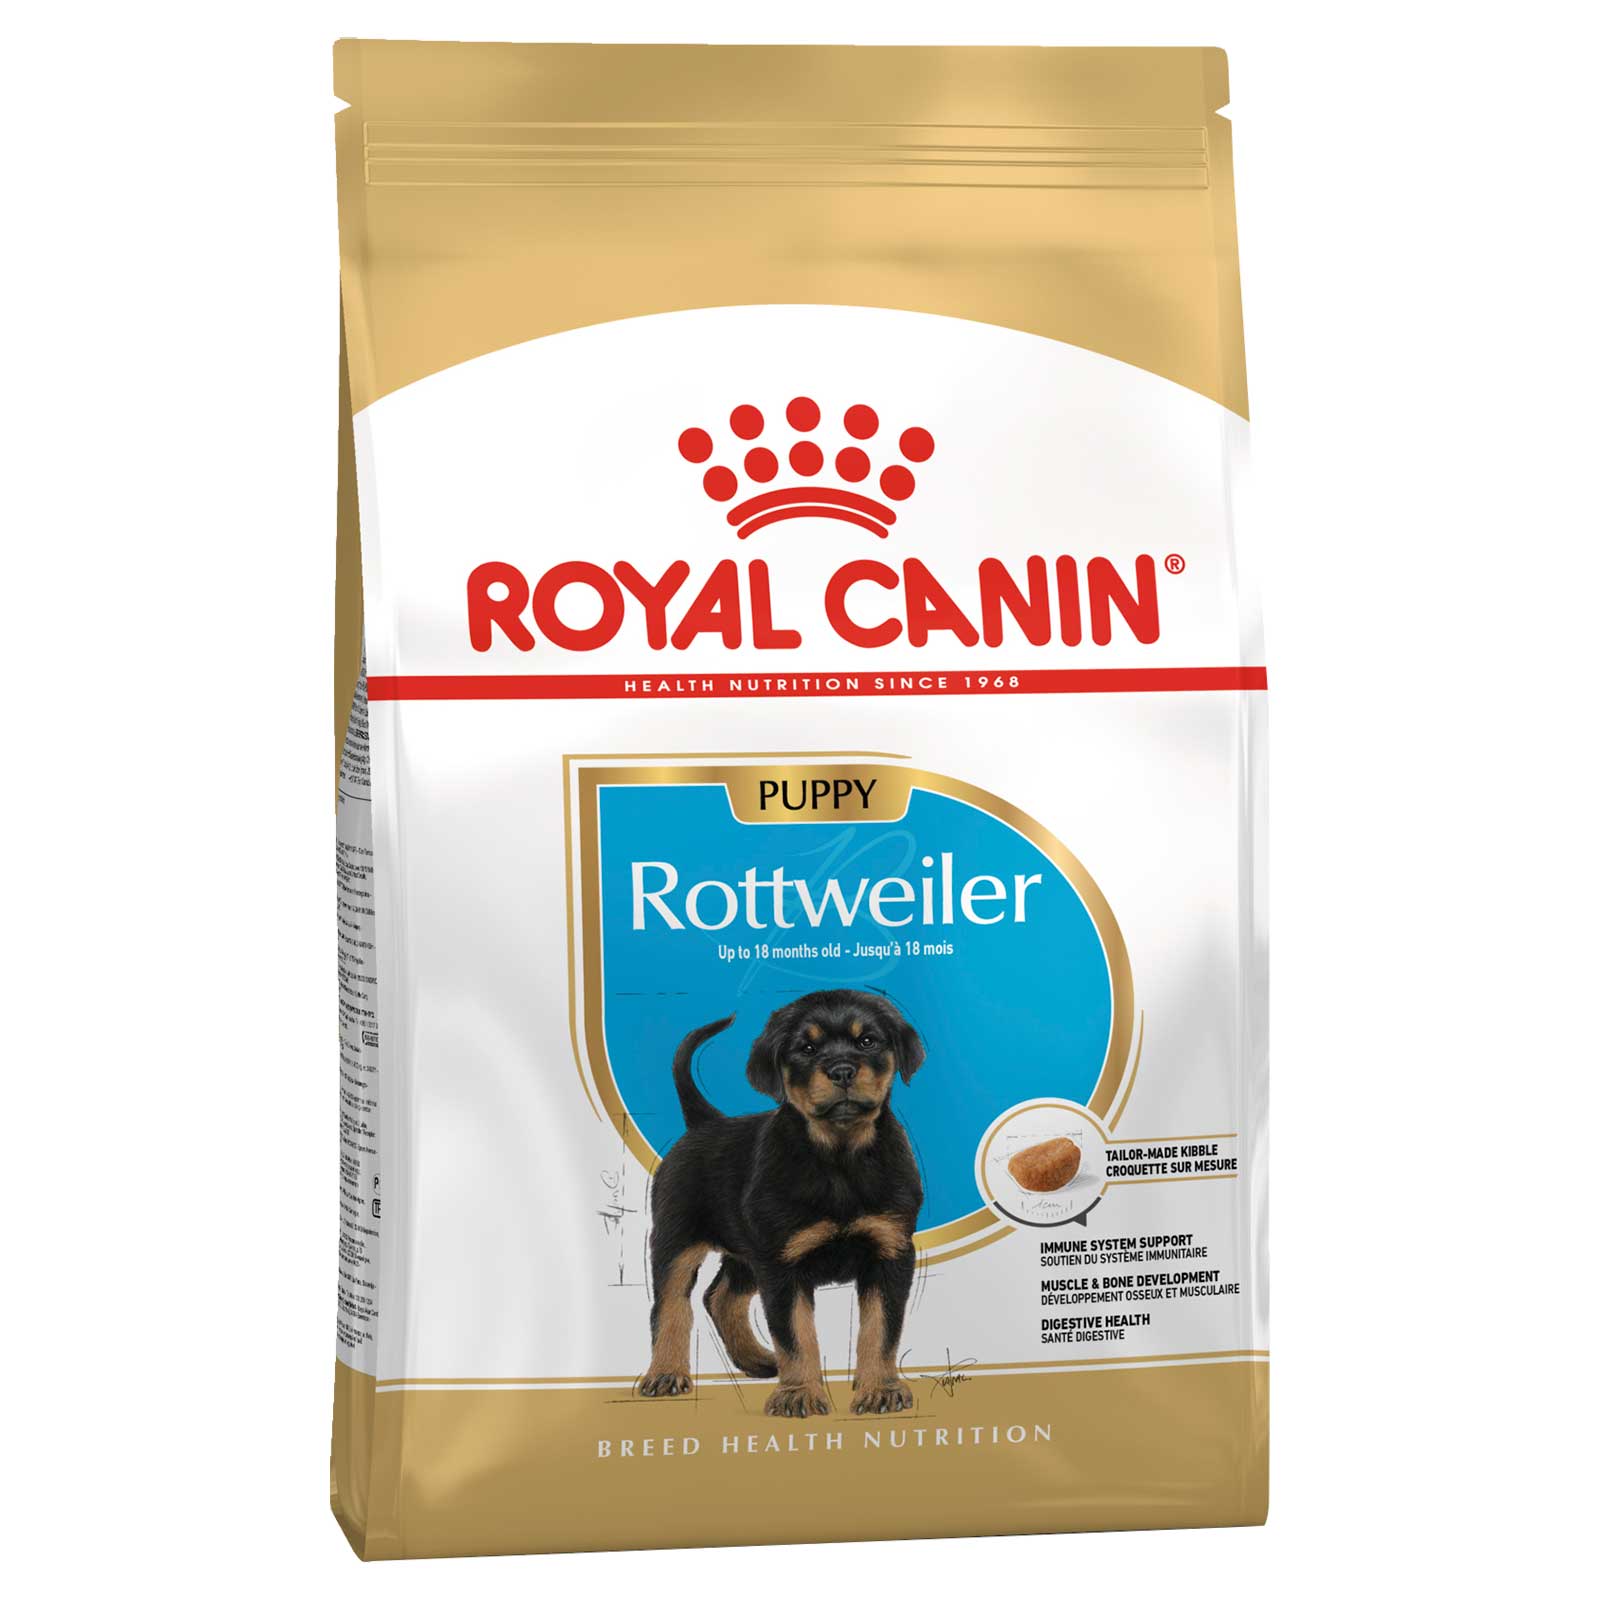 Royal Canin Dog Food Puppy Rottweiler